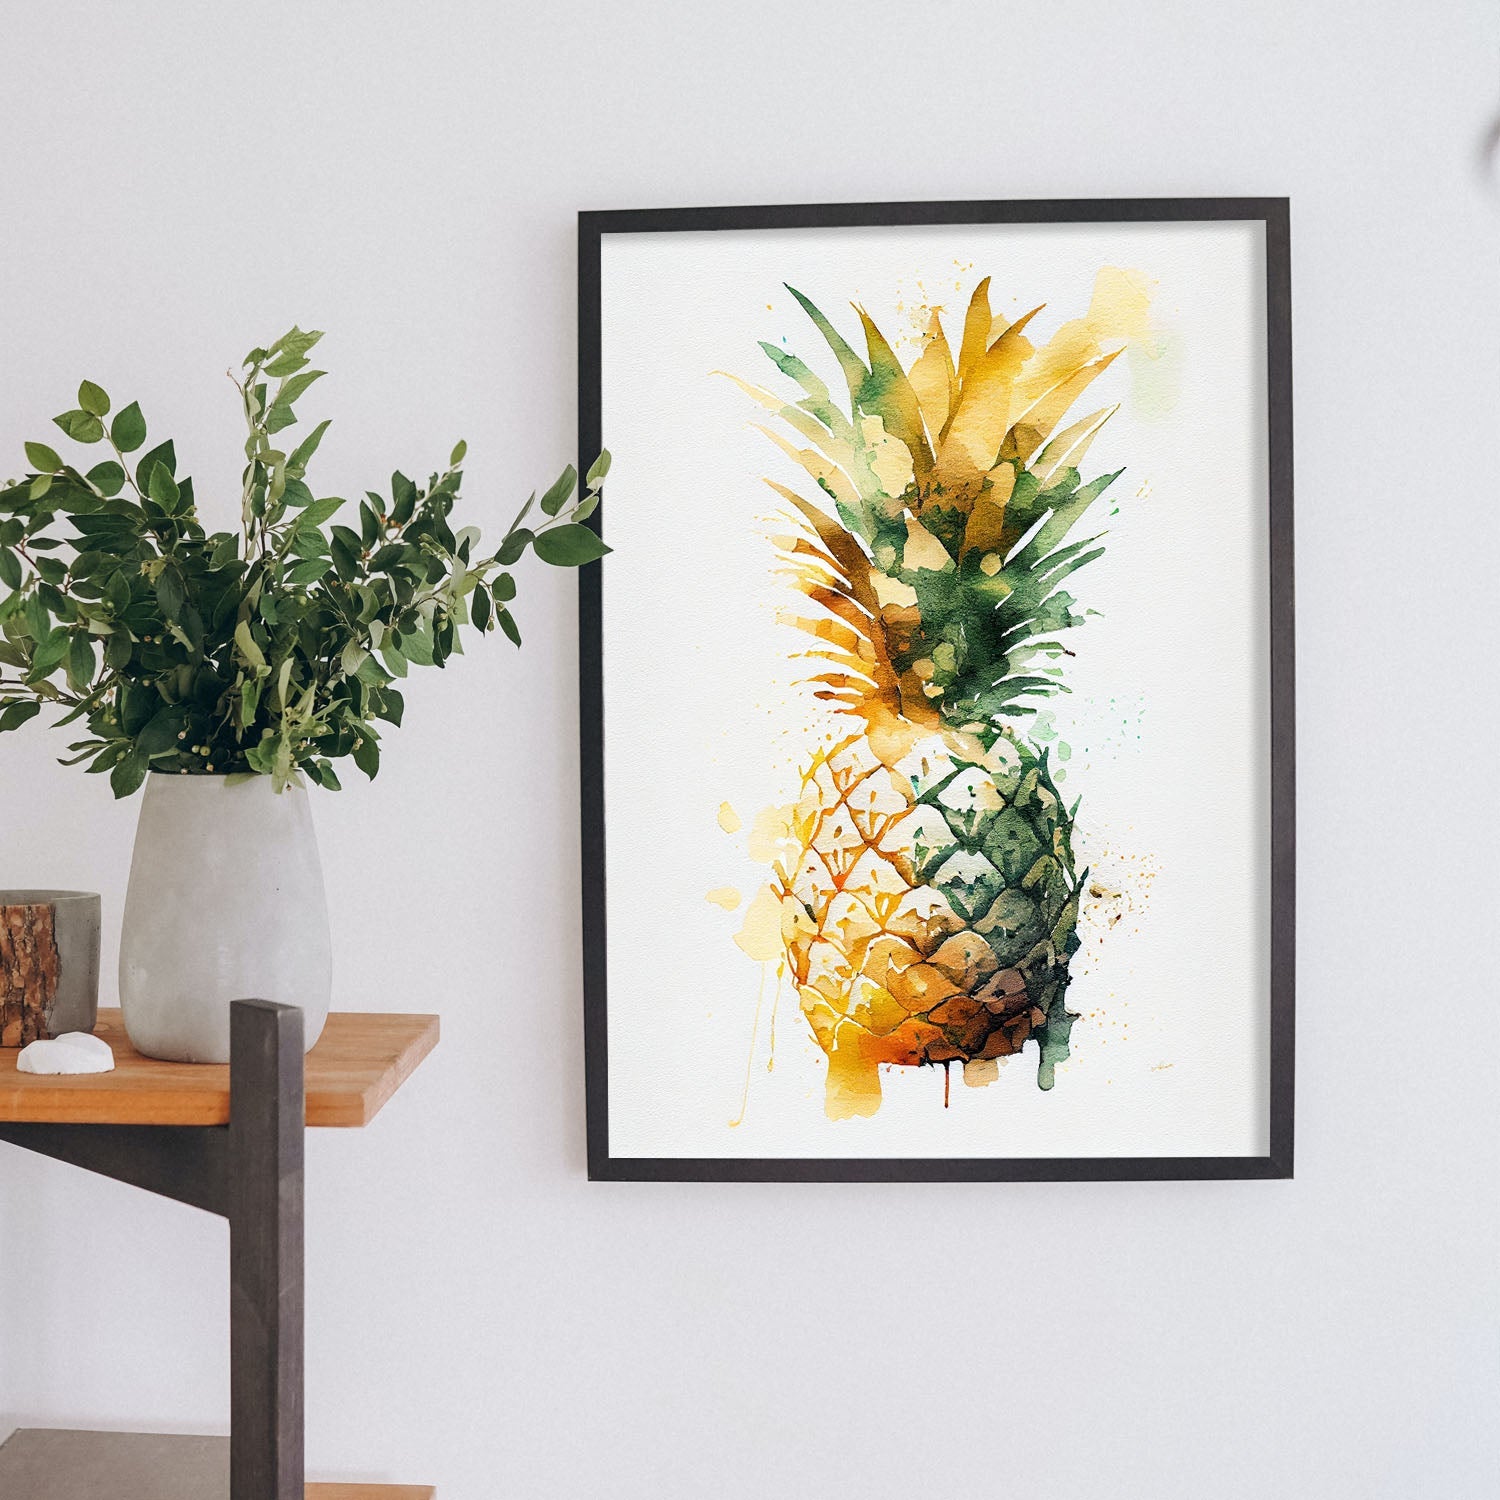 Nacnic minimalist Pineapple_2. Aesthetic Wall Art Prints for Bedroom or Living Room Design.-Artwork-Nacnic-A4-Sin Marco-Nacnic Estudio SL